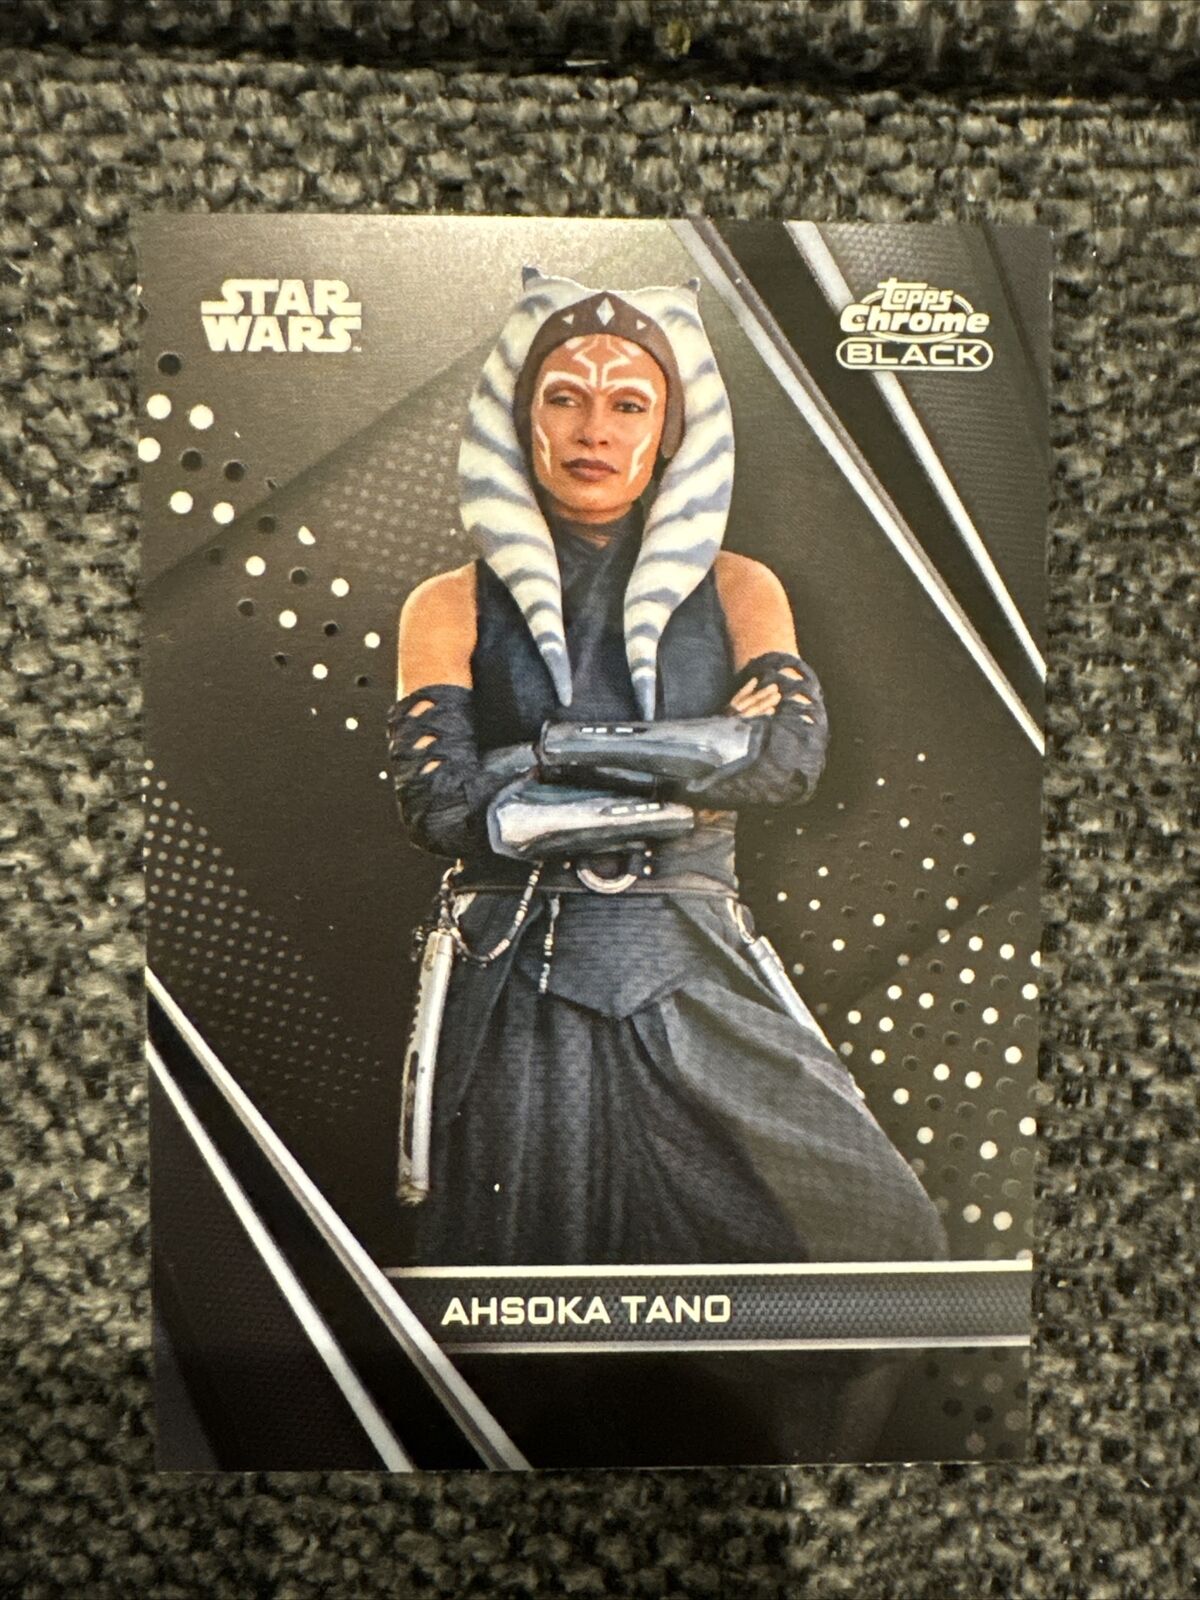 2023 Topps Star Wars Chrome Black Ahsoka Tano Base Card 